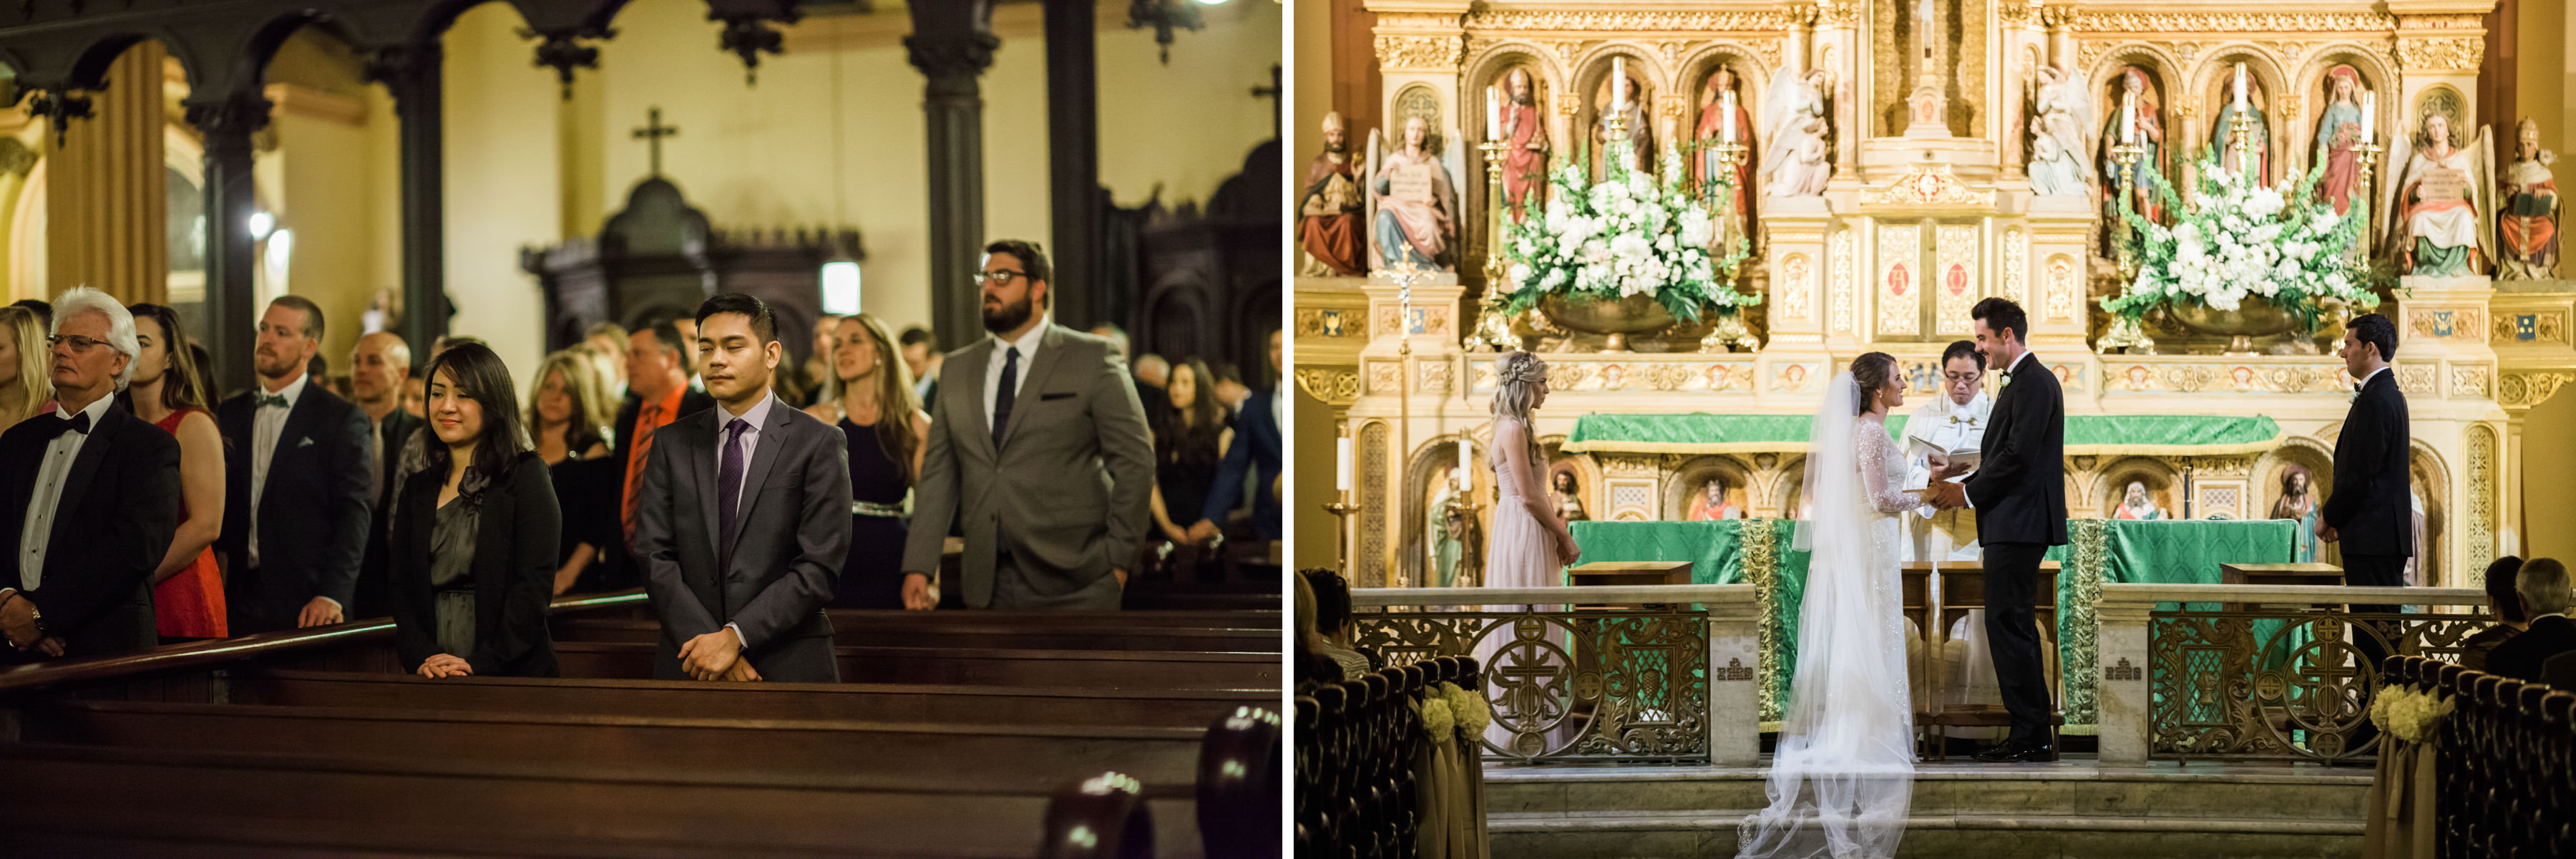 MULLET_WEDDING_NEW_ORLEANS_LOUISIANA_WEDDING_PHOTOGRAPHY_113